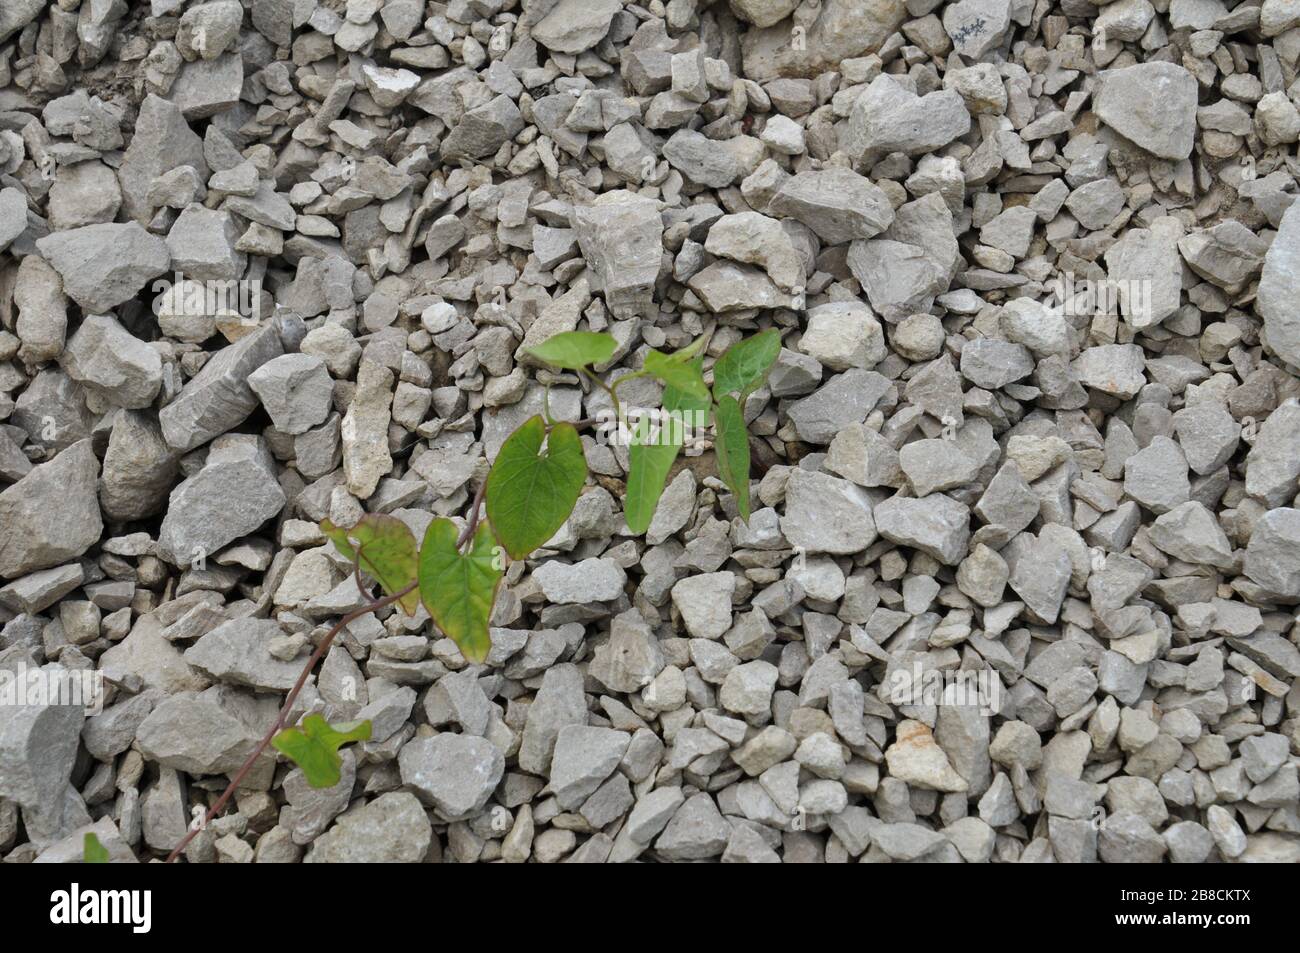 Bindweed plant growing on crushed stone Stock Photo